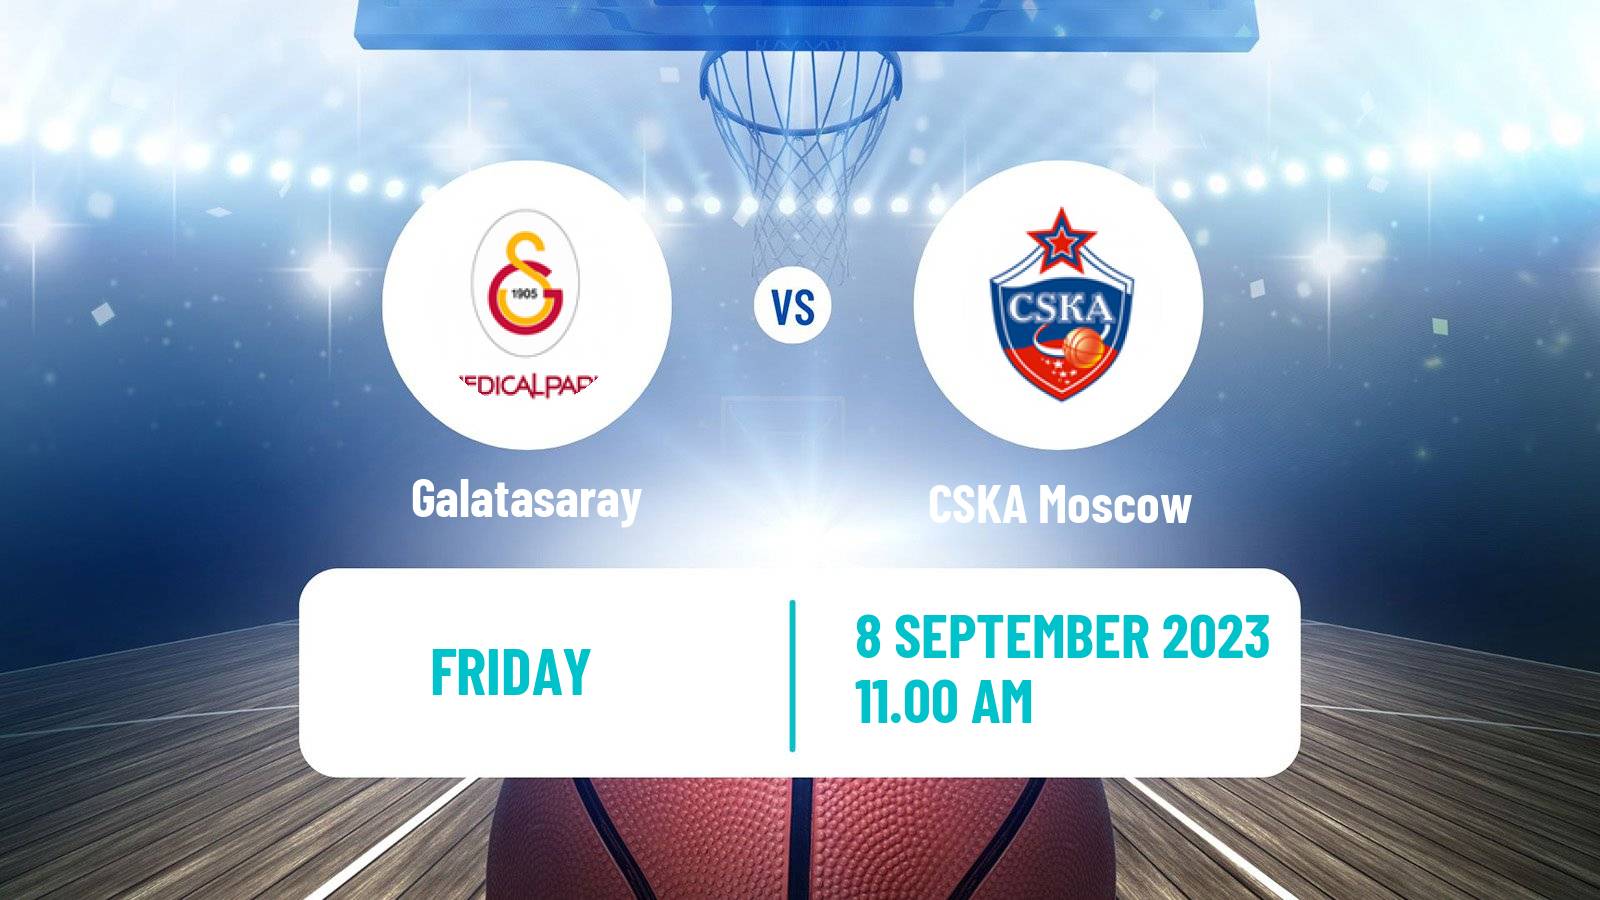 Basketball Club Friendly Basketball Galatasaray - CSKA Moscow